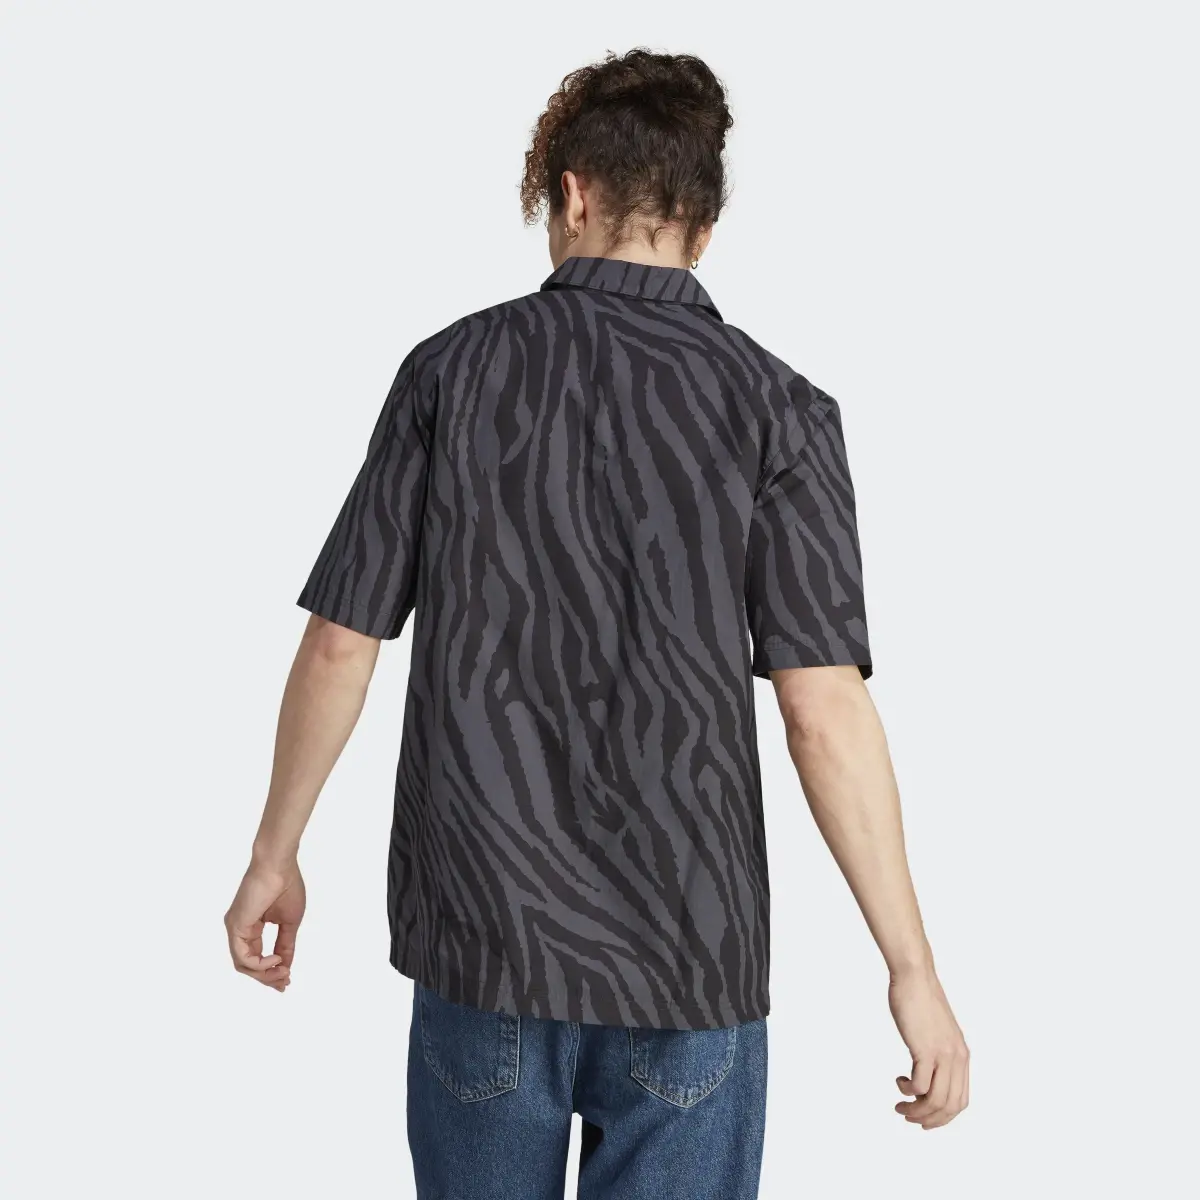 Adidas Graphics Animal Short Sleeve Shirt. 3